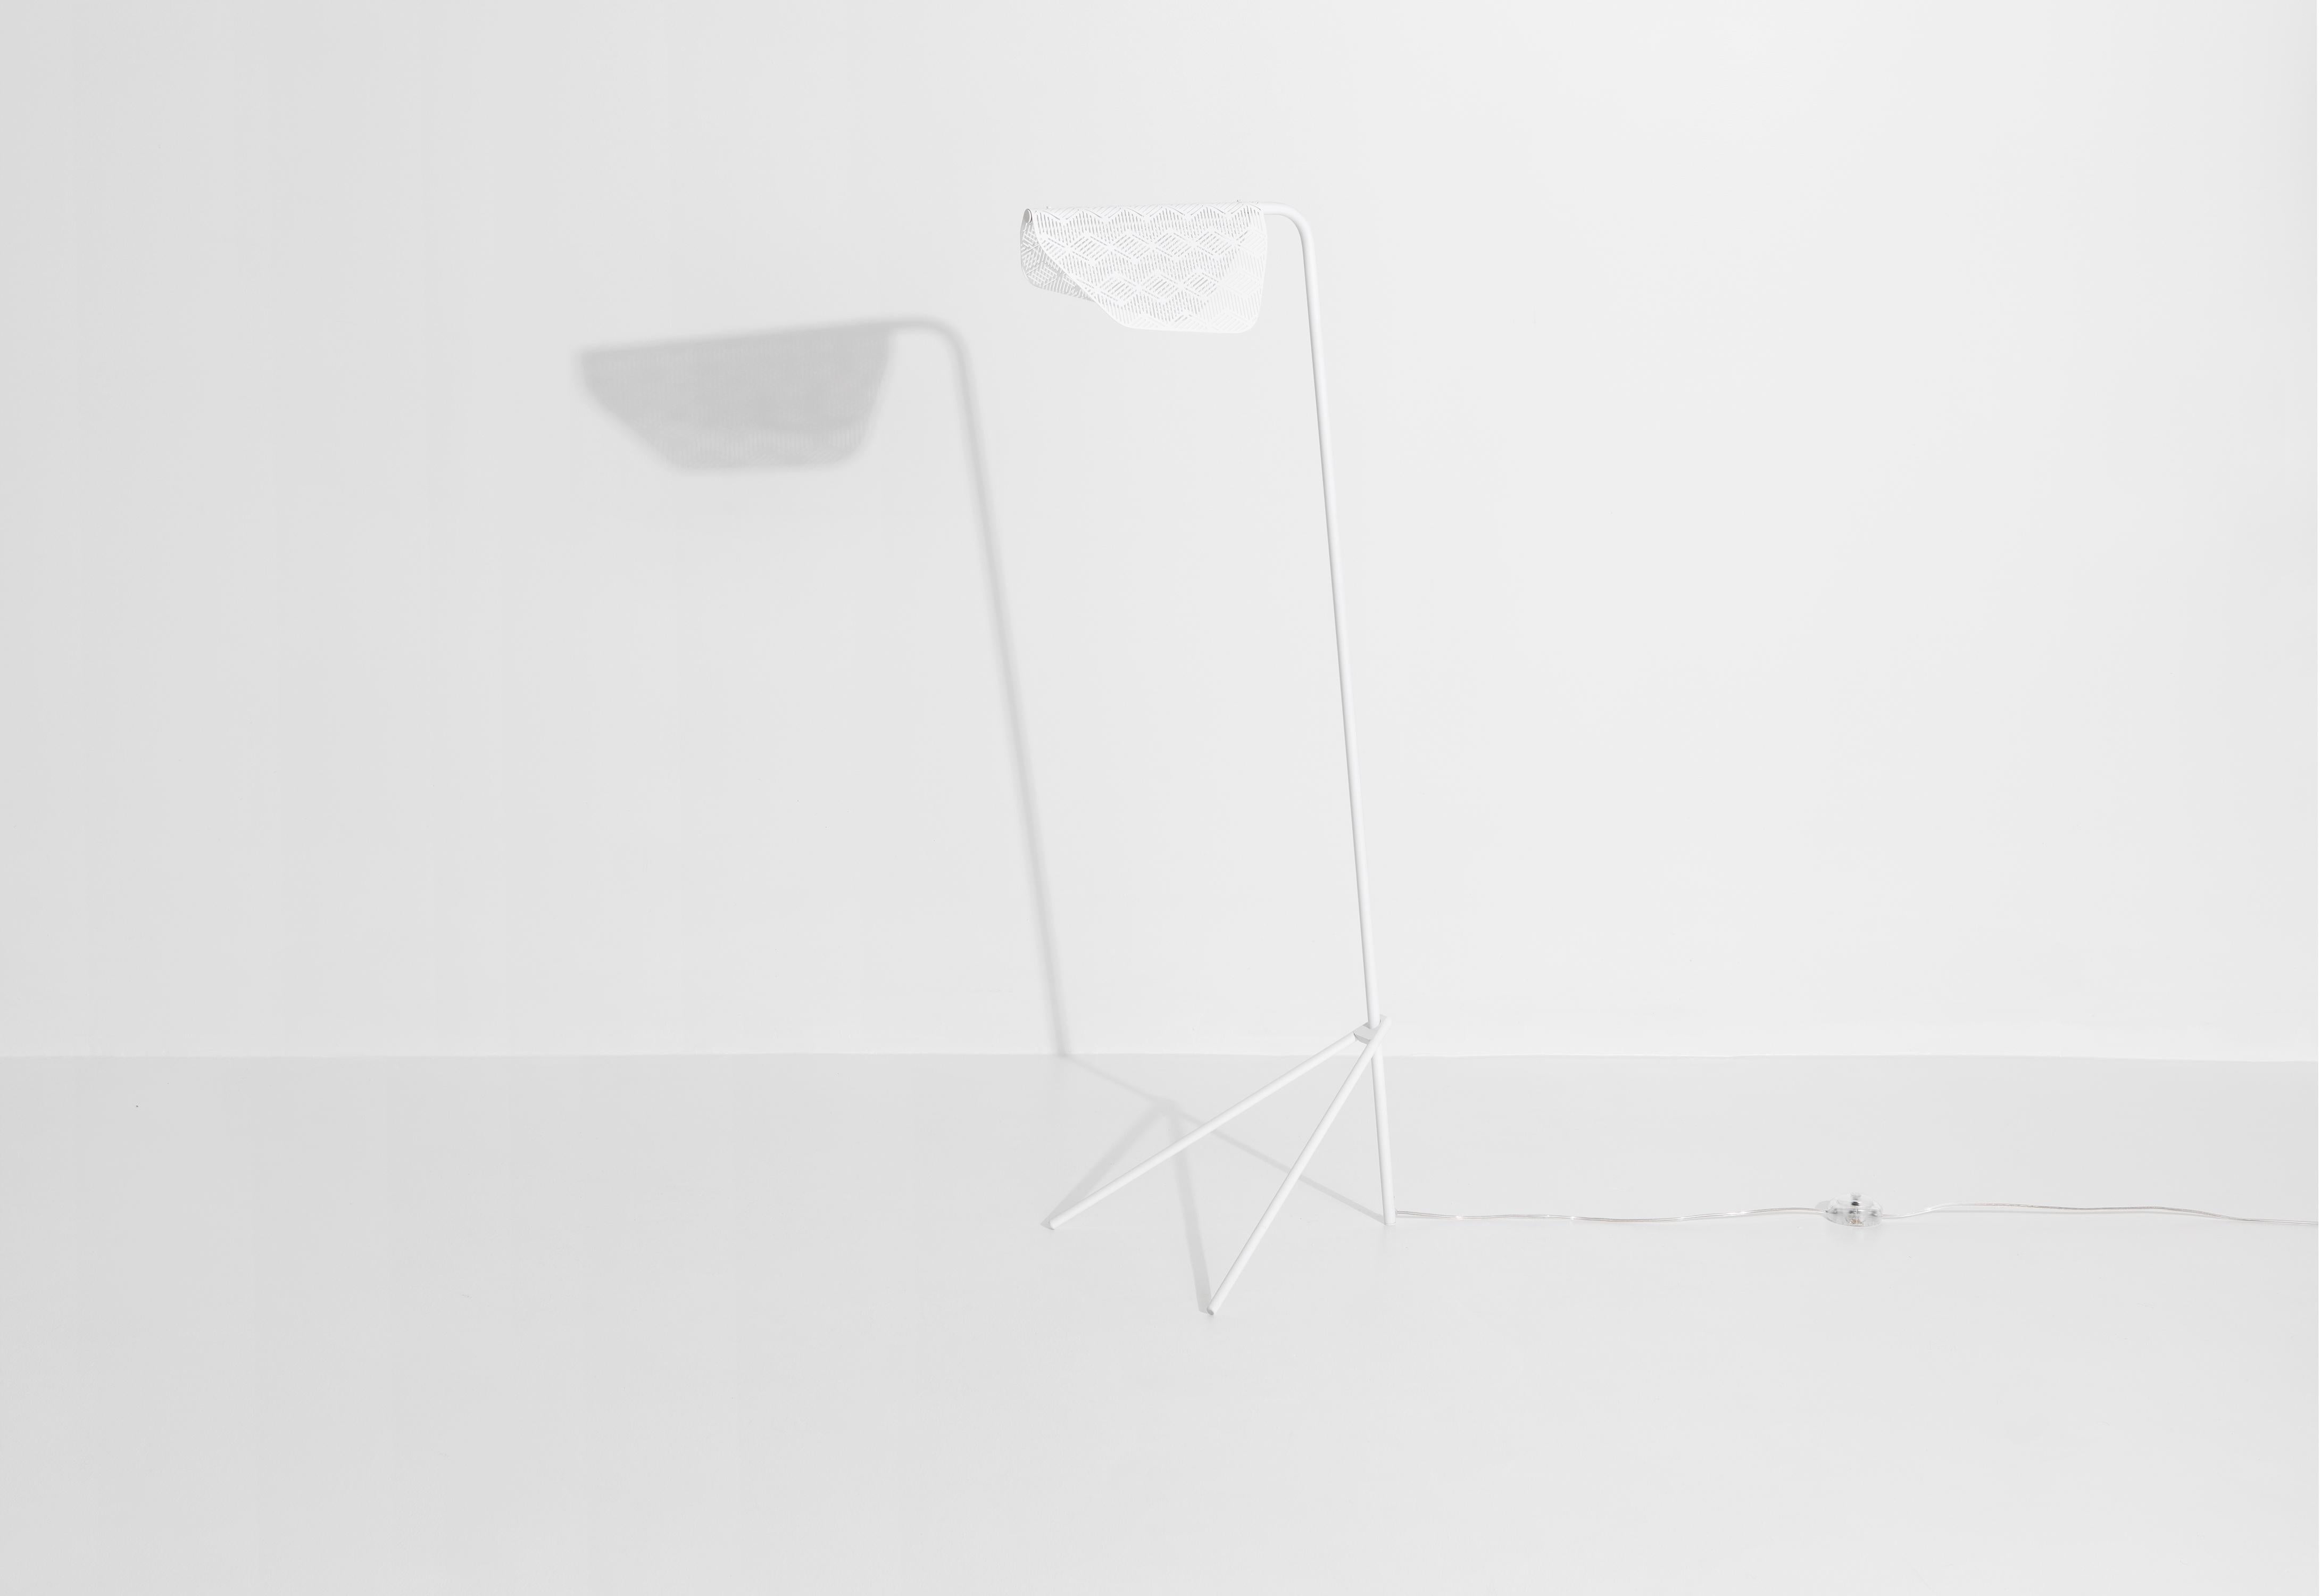 Brass Petite Friture Mediterranea Floor Lamp in White by Noé Duchaufour-Lawrance, 2016 For Sale